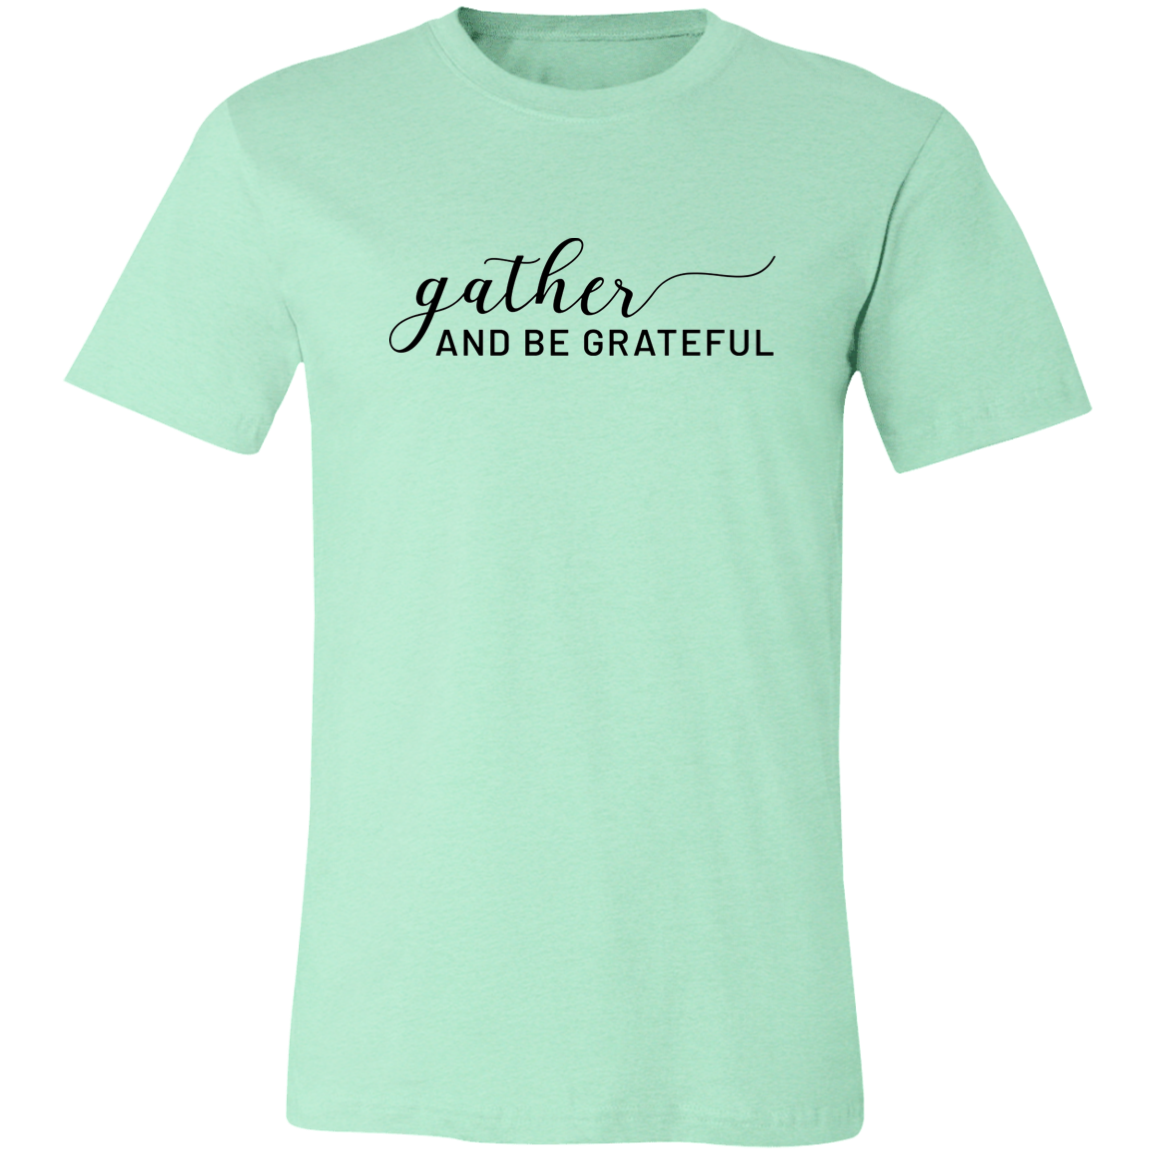 Gather and Be Grateful Shirt